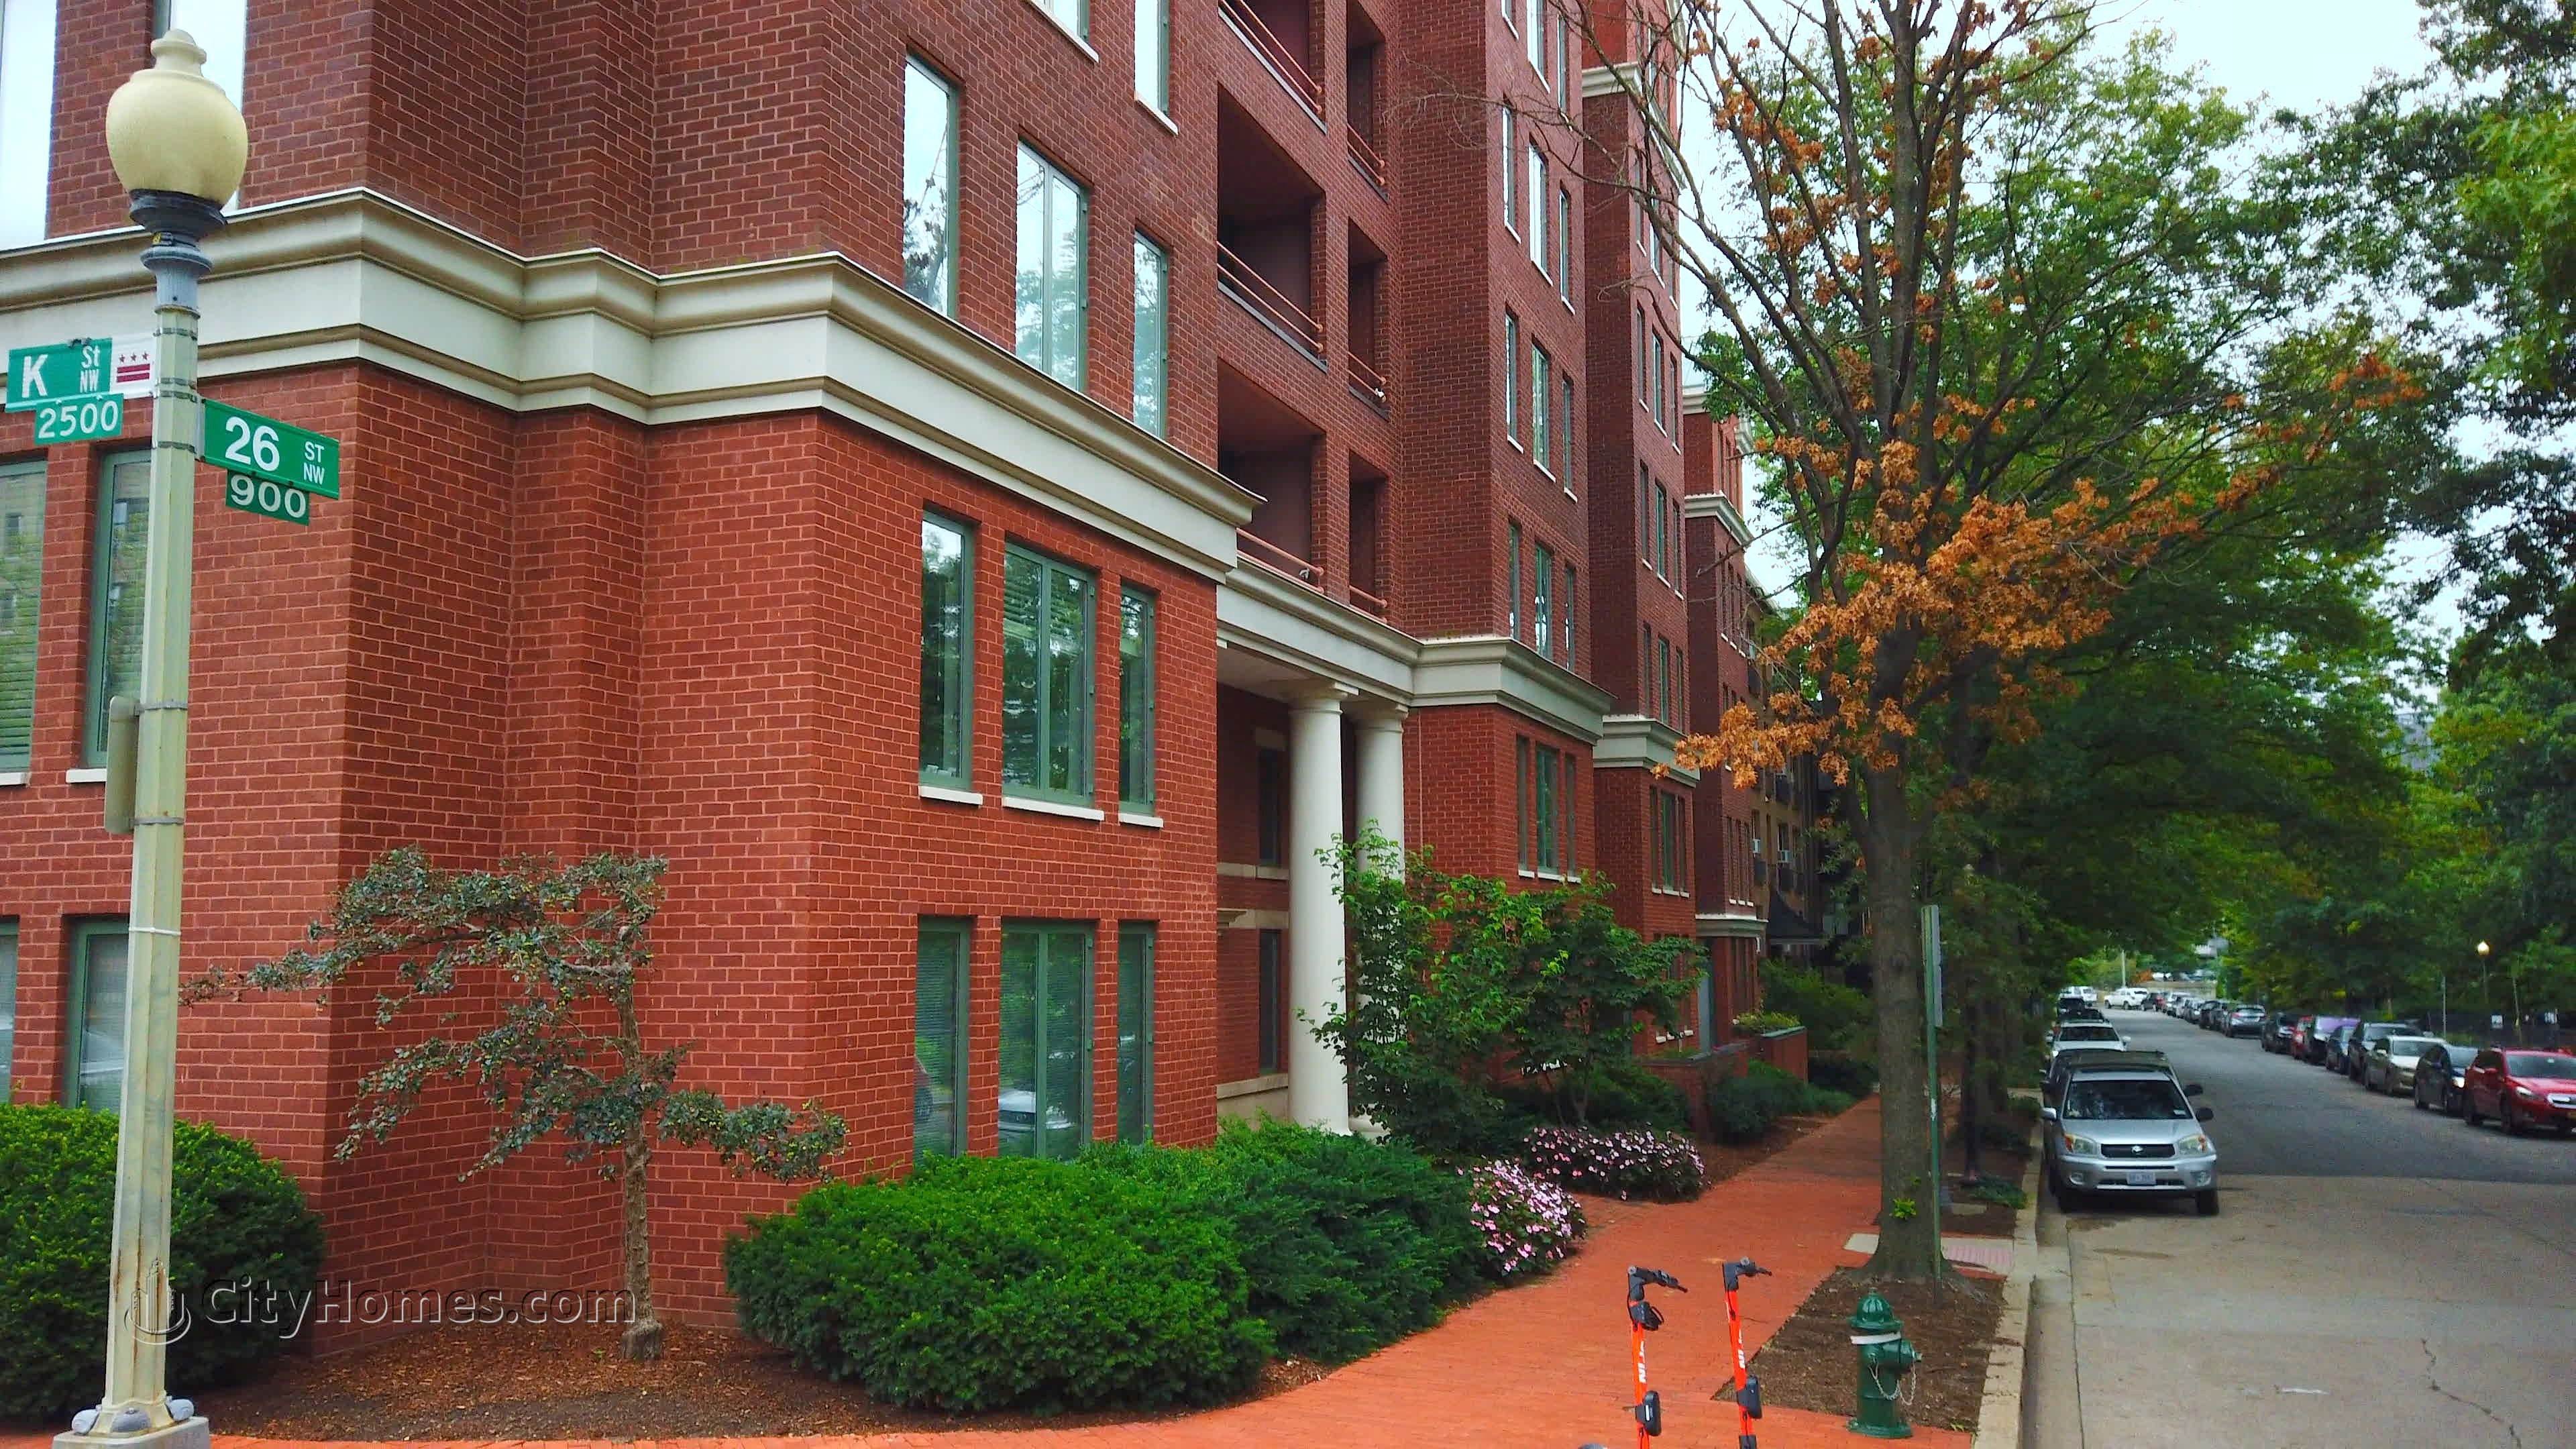 6. The Griffin edificio a 955 26th St NW, Foggy Bottom, Washington, DC 20037